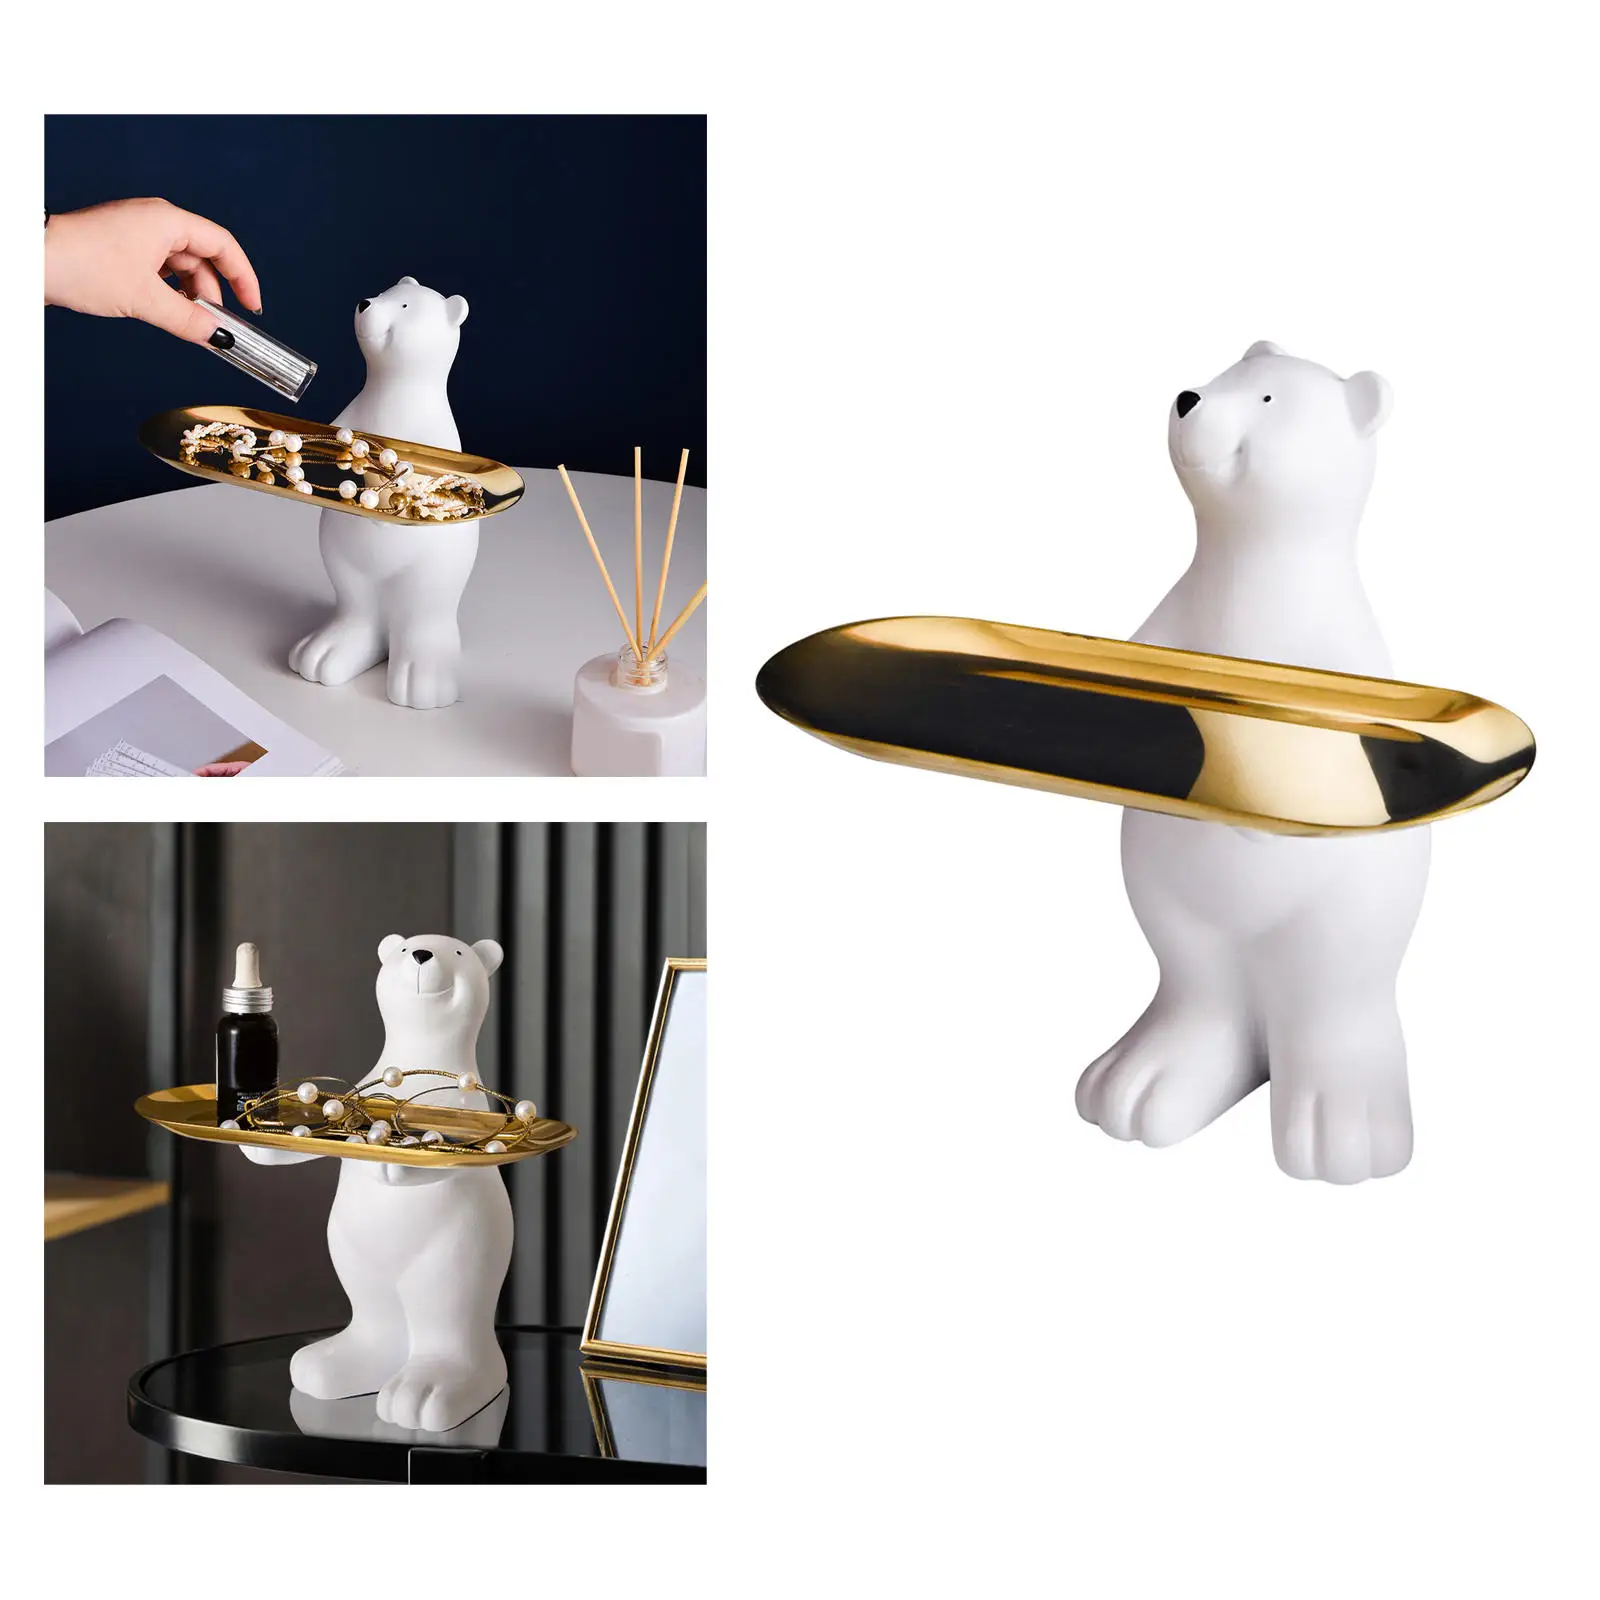 Polar Bear Statue Storage Tray Holder Candy Dish Nordic Porch Table Decor